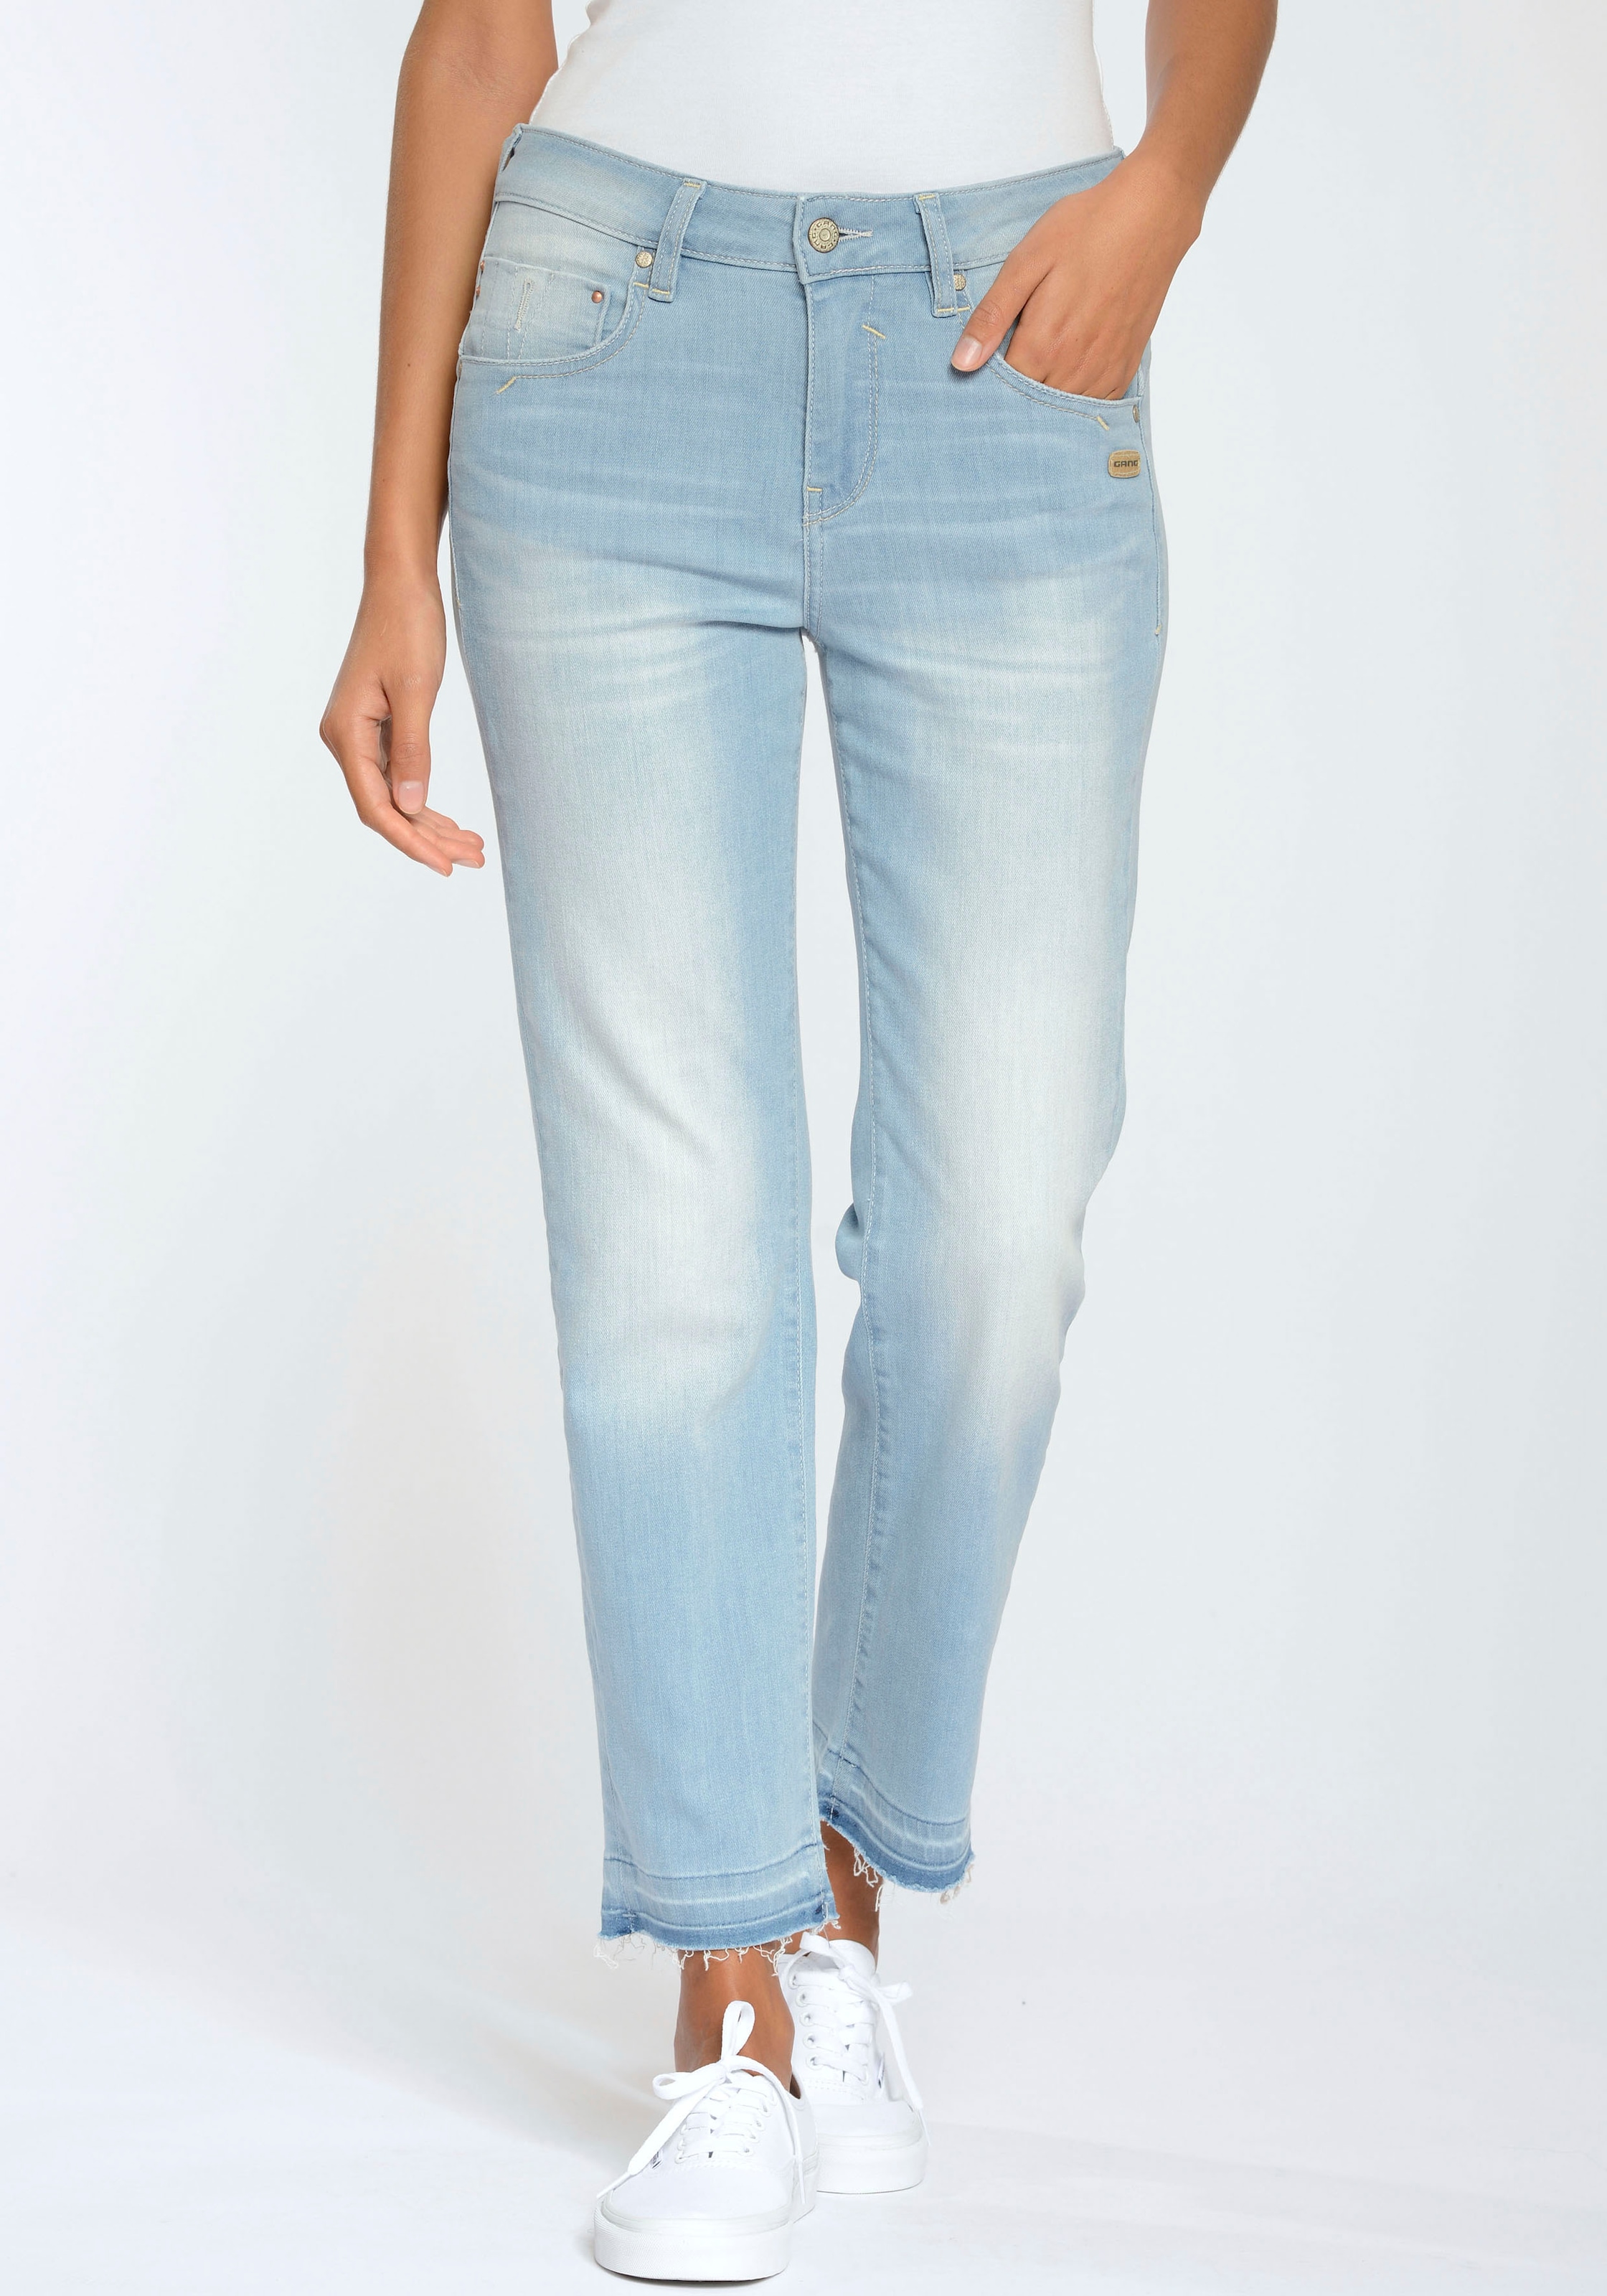 »94RUBINIA durch Elasthan-A GANG Sitz kaufen CROPPED«, perfekter Straight-Jeans